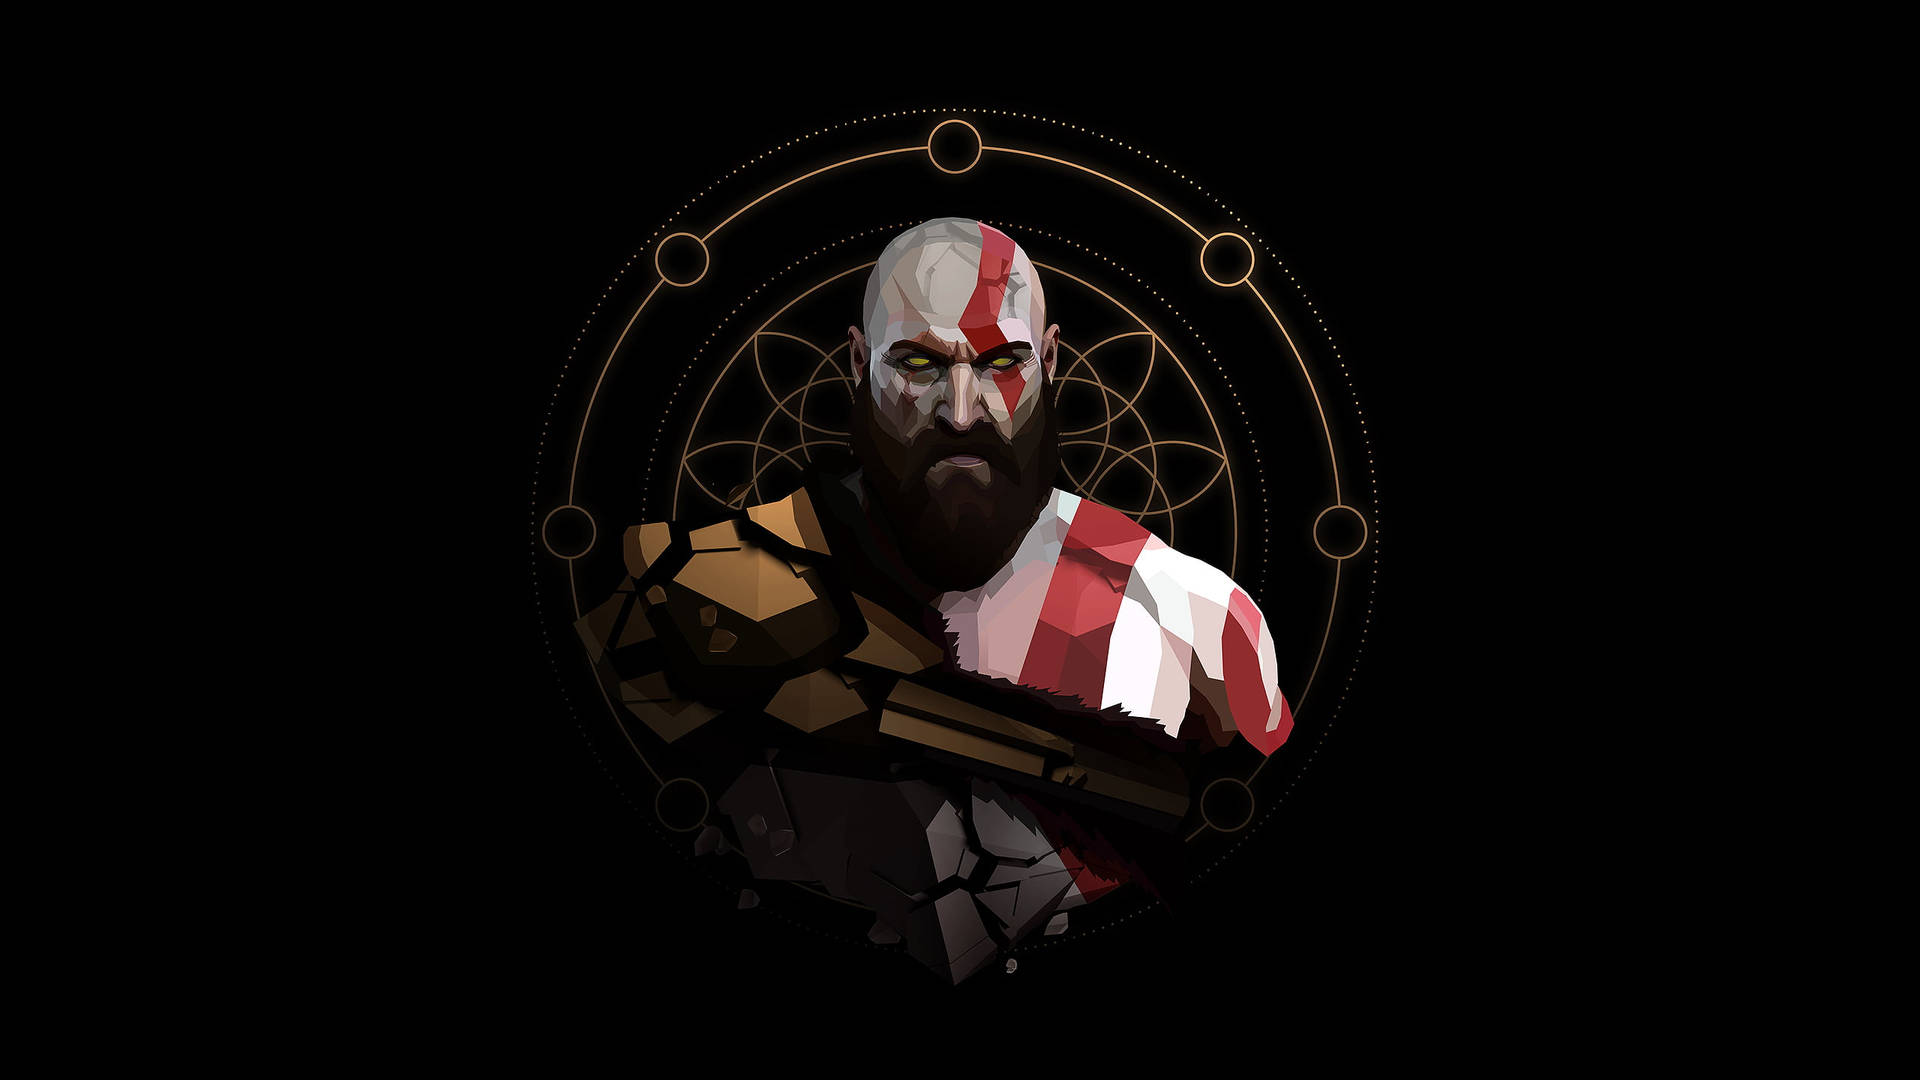 Cool Kratos Digital Fanart Wallpaper